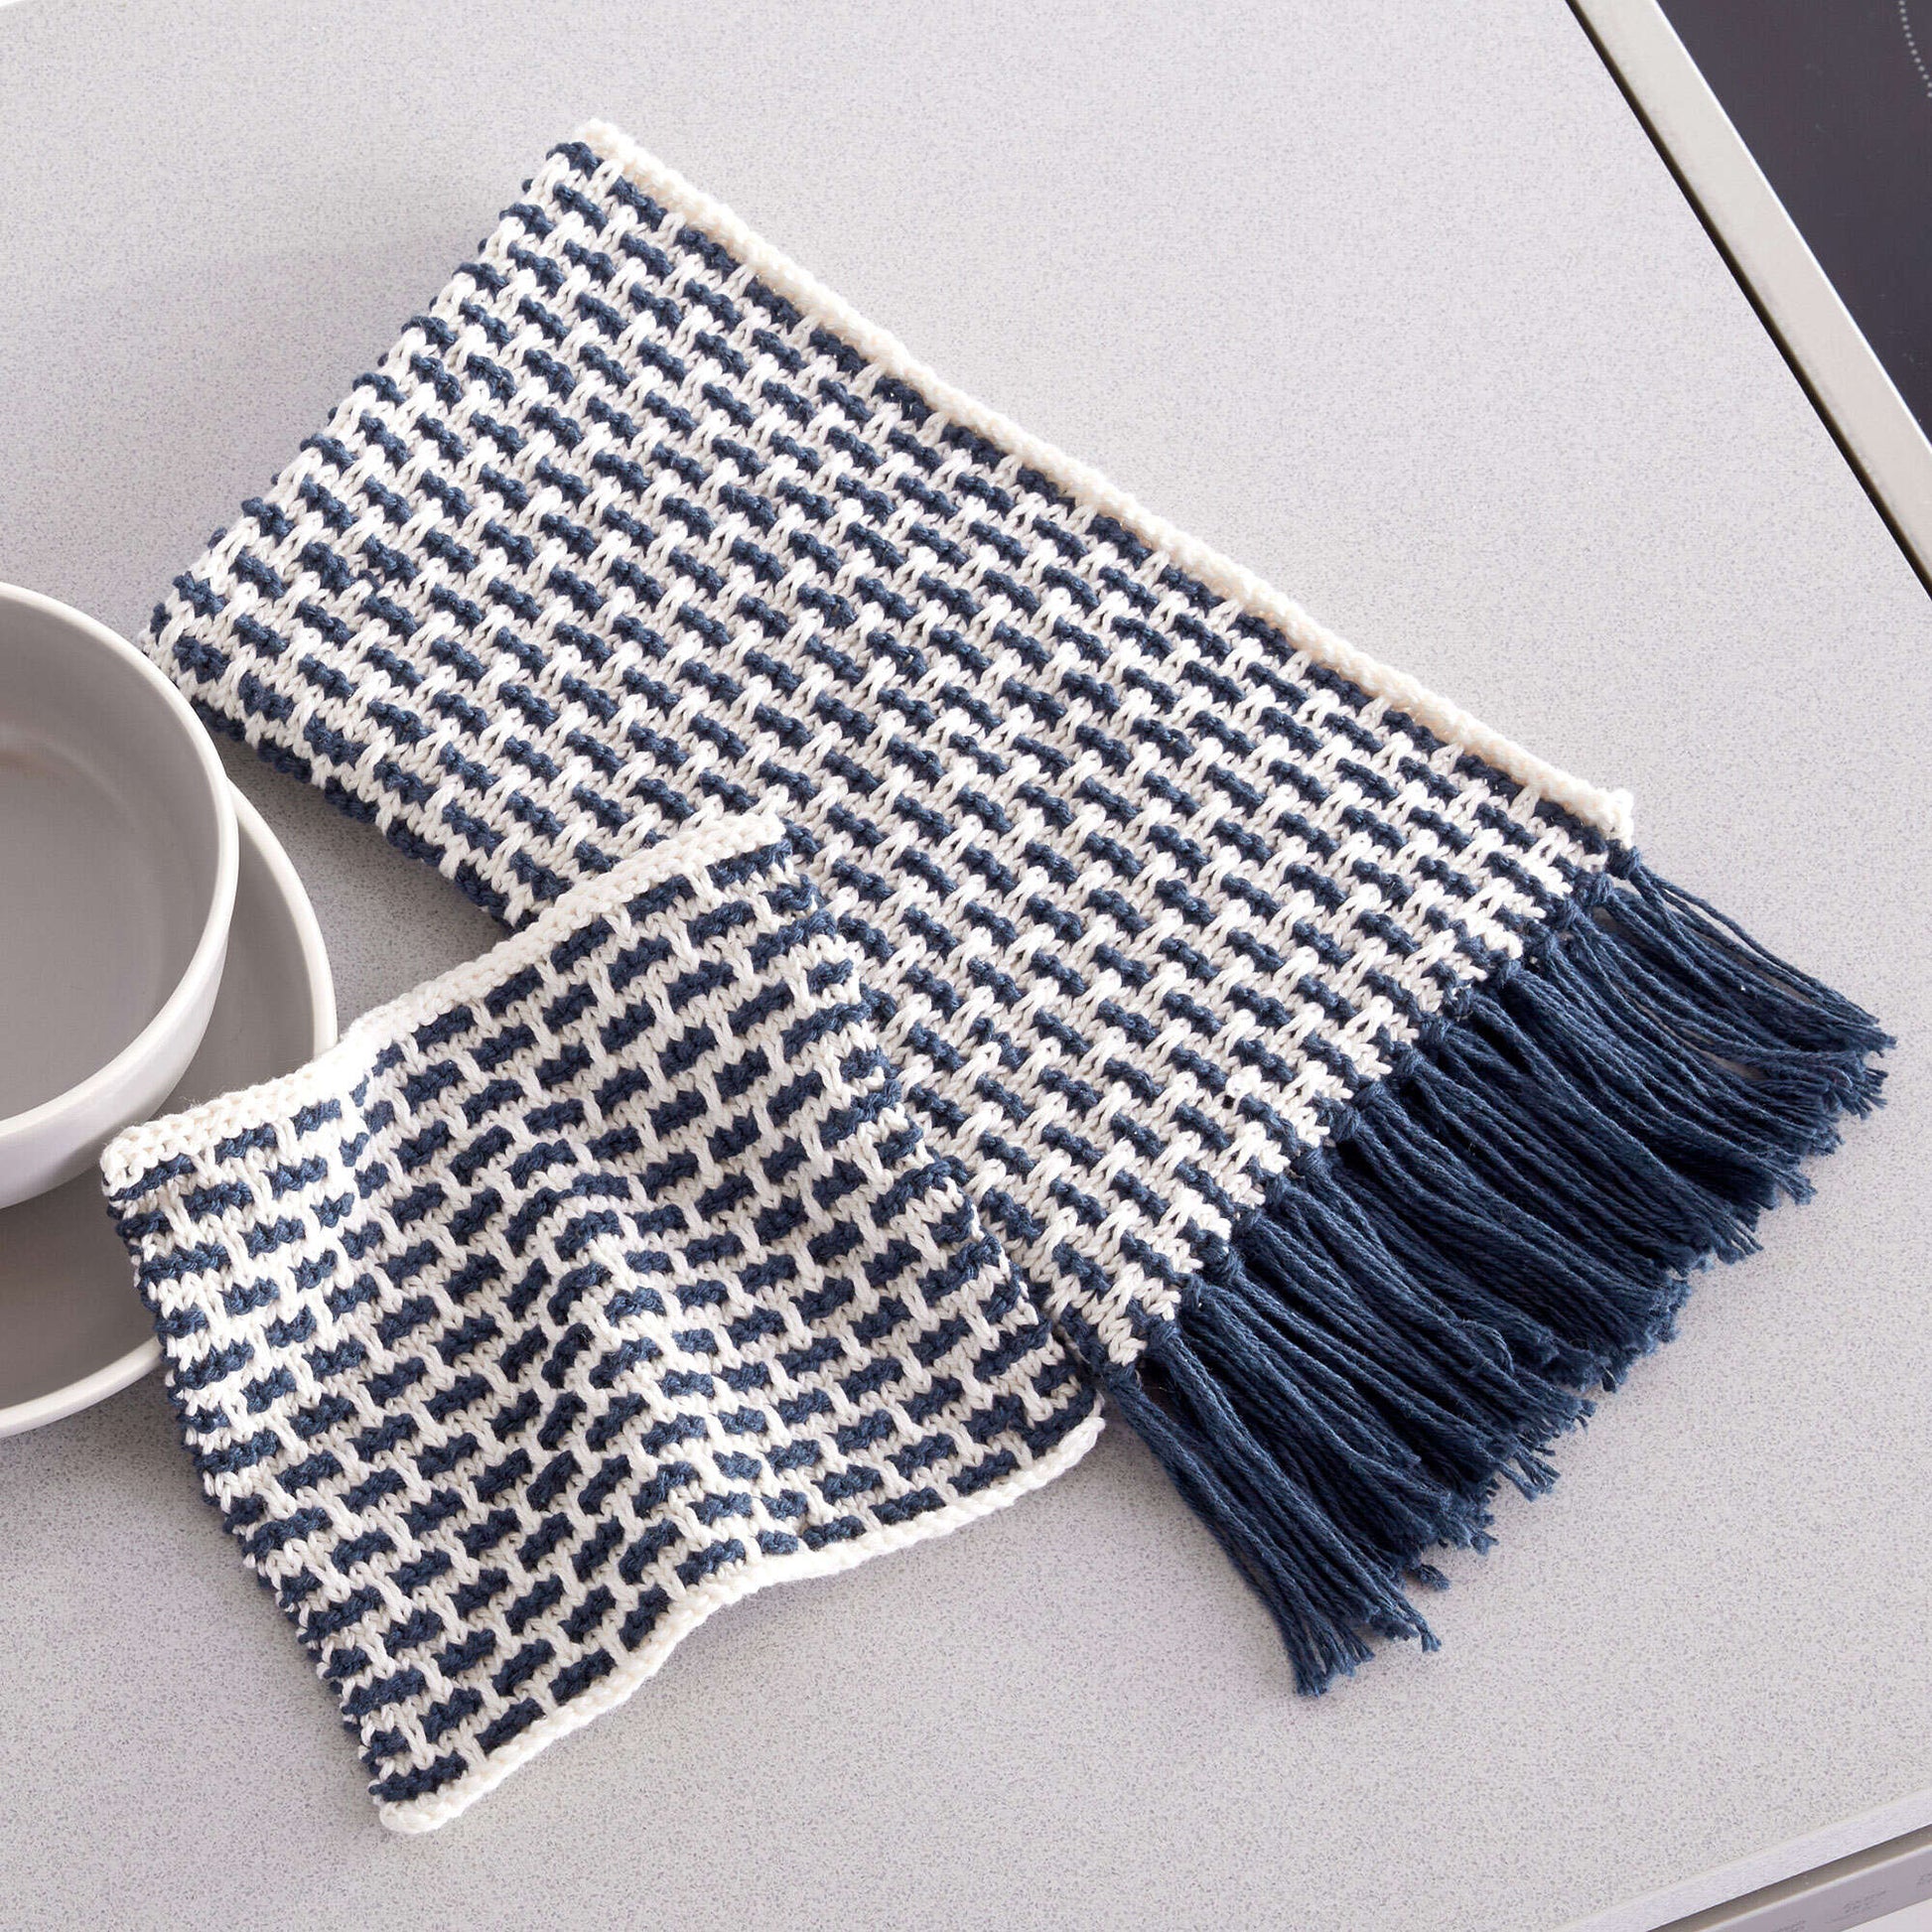 Free Lily Sugar'n Cream Modern Weave Knit Kitchen Set Pattern